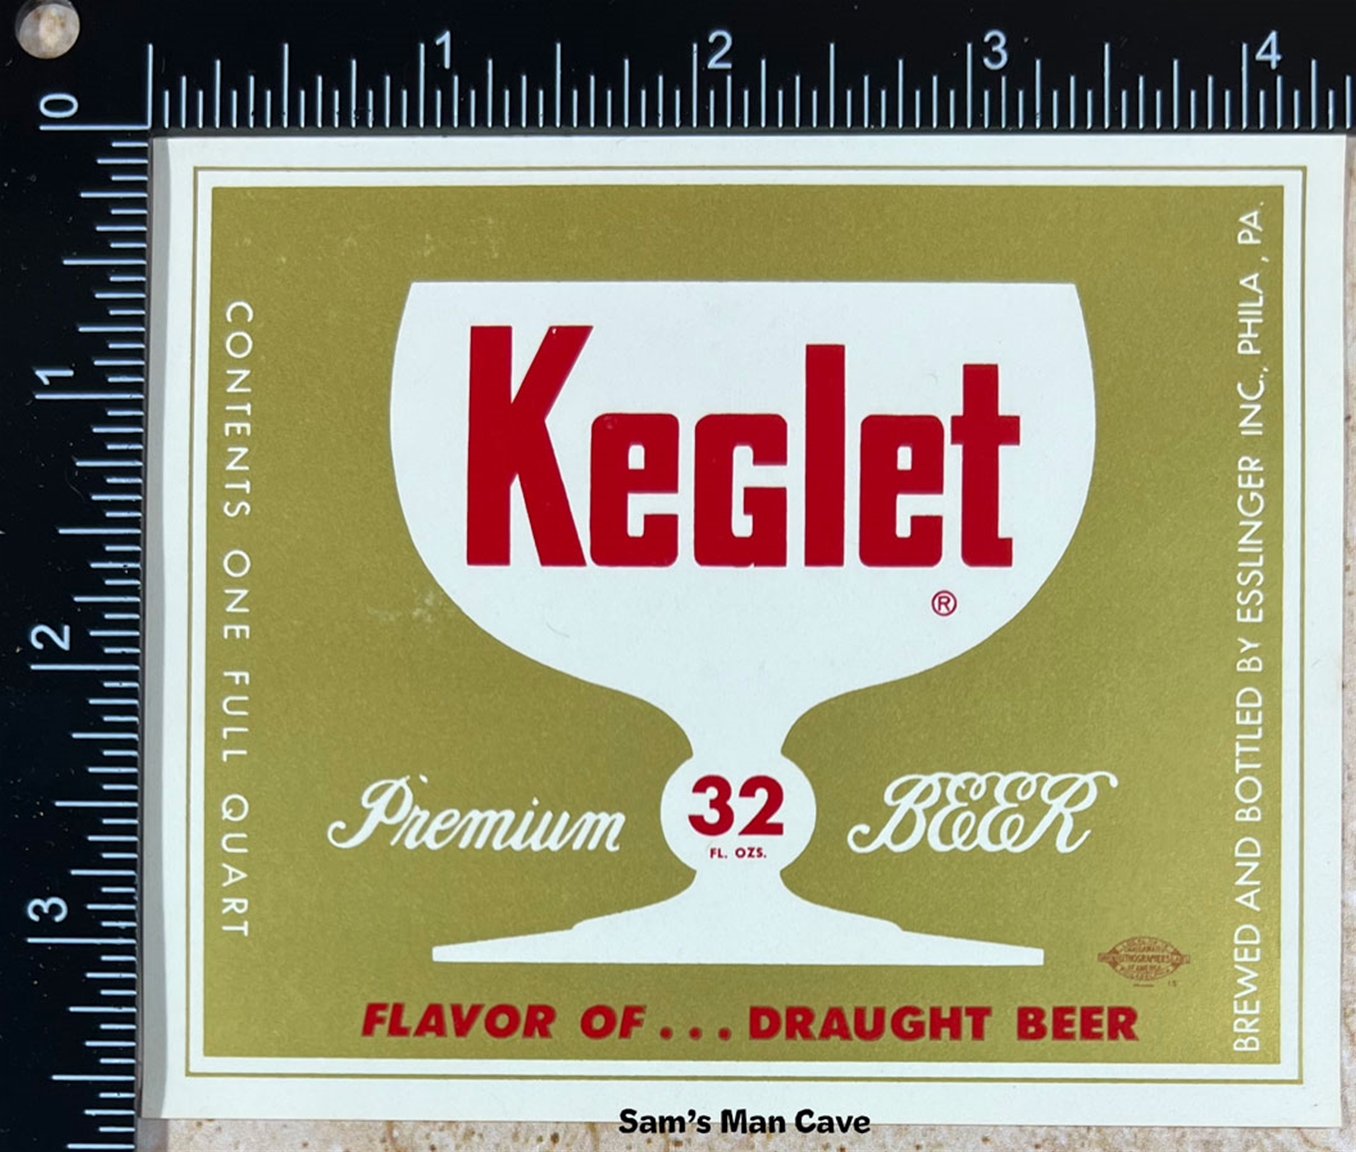 Keglet Premium Beer Label